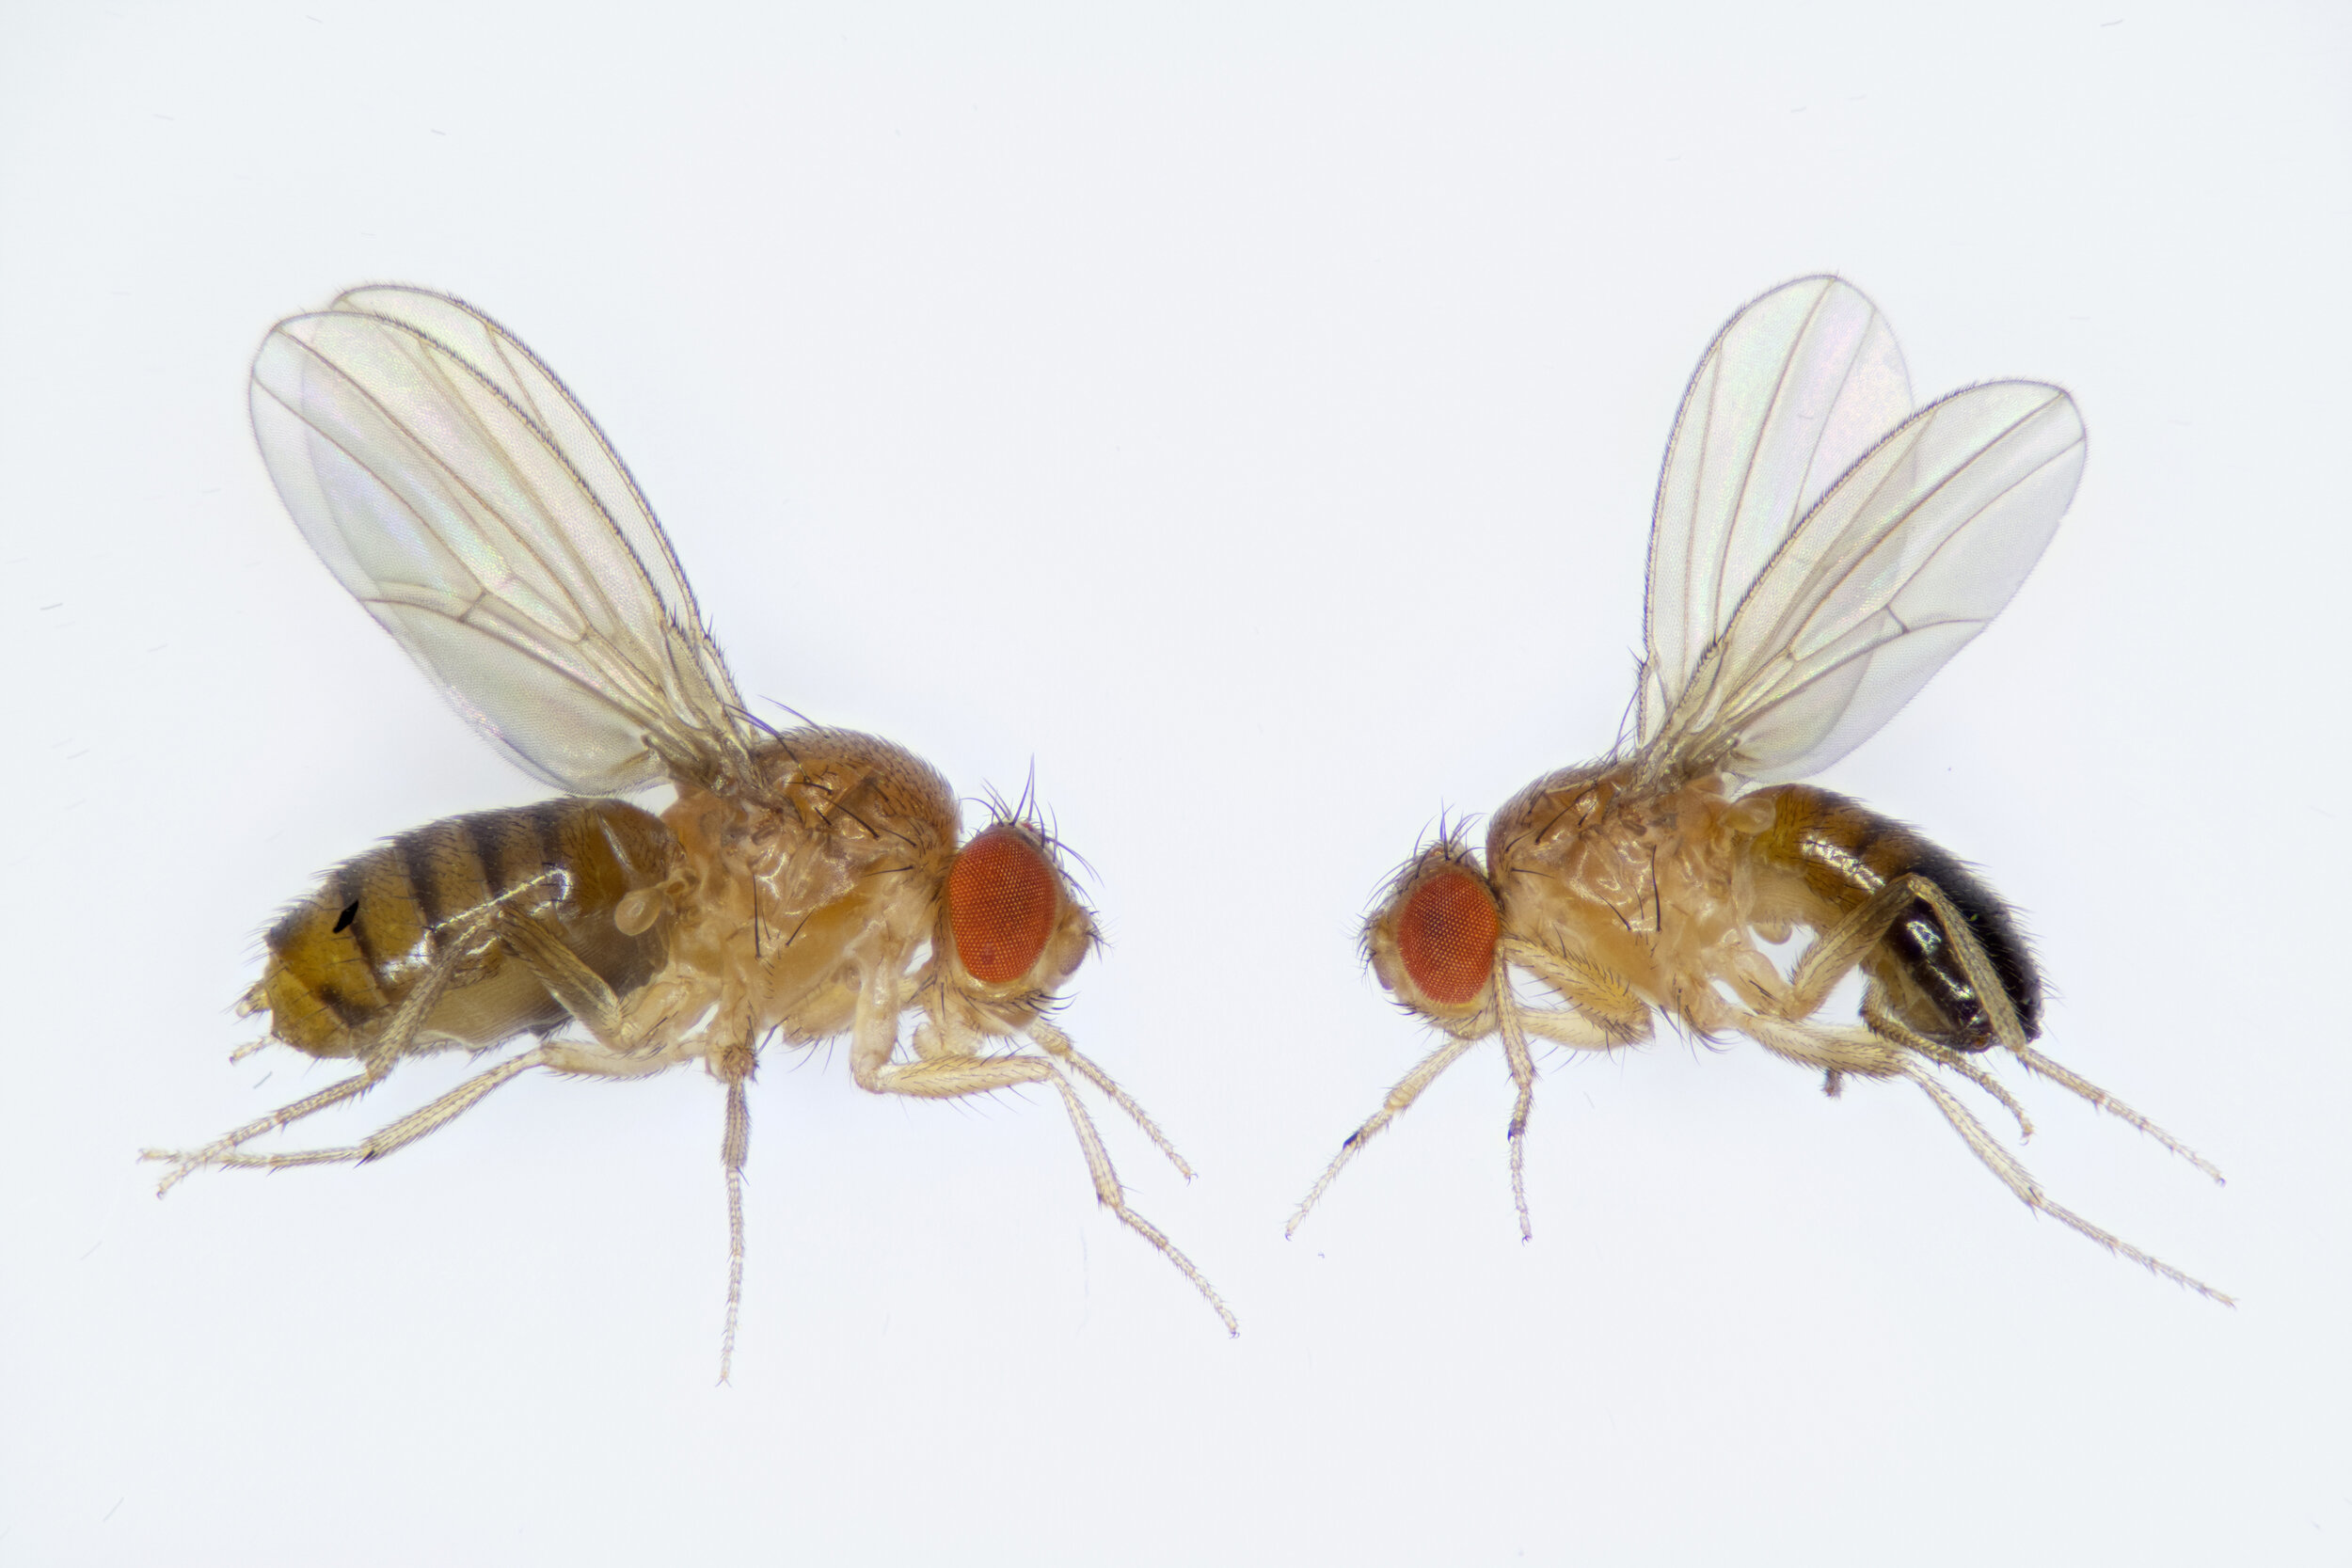  female and male  Drosophila melanogaster  